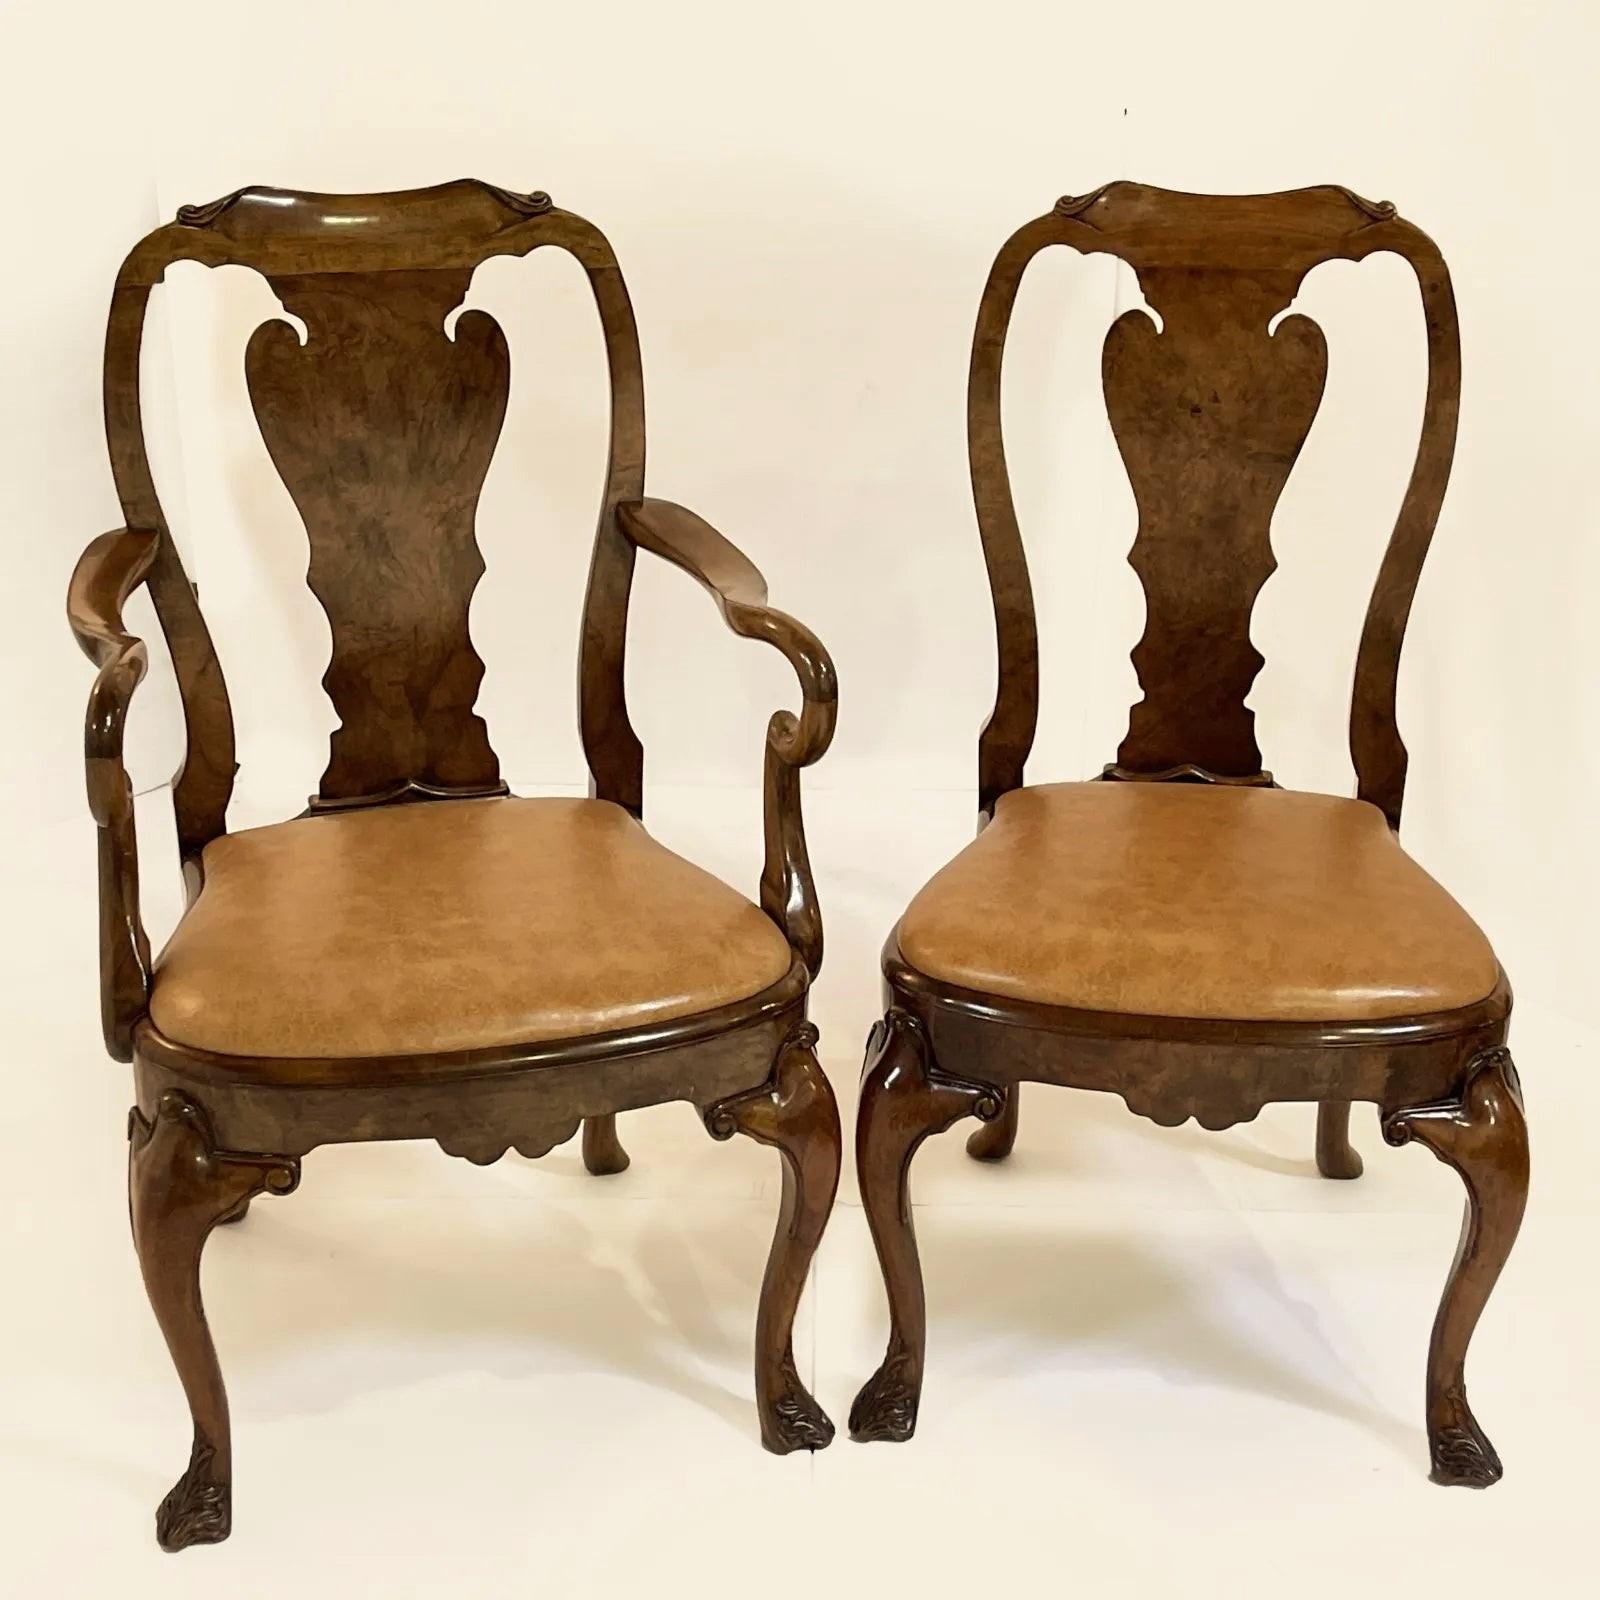 George III Style Burton Ching Burl walnut dining chairs - Set of 10.